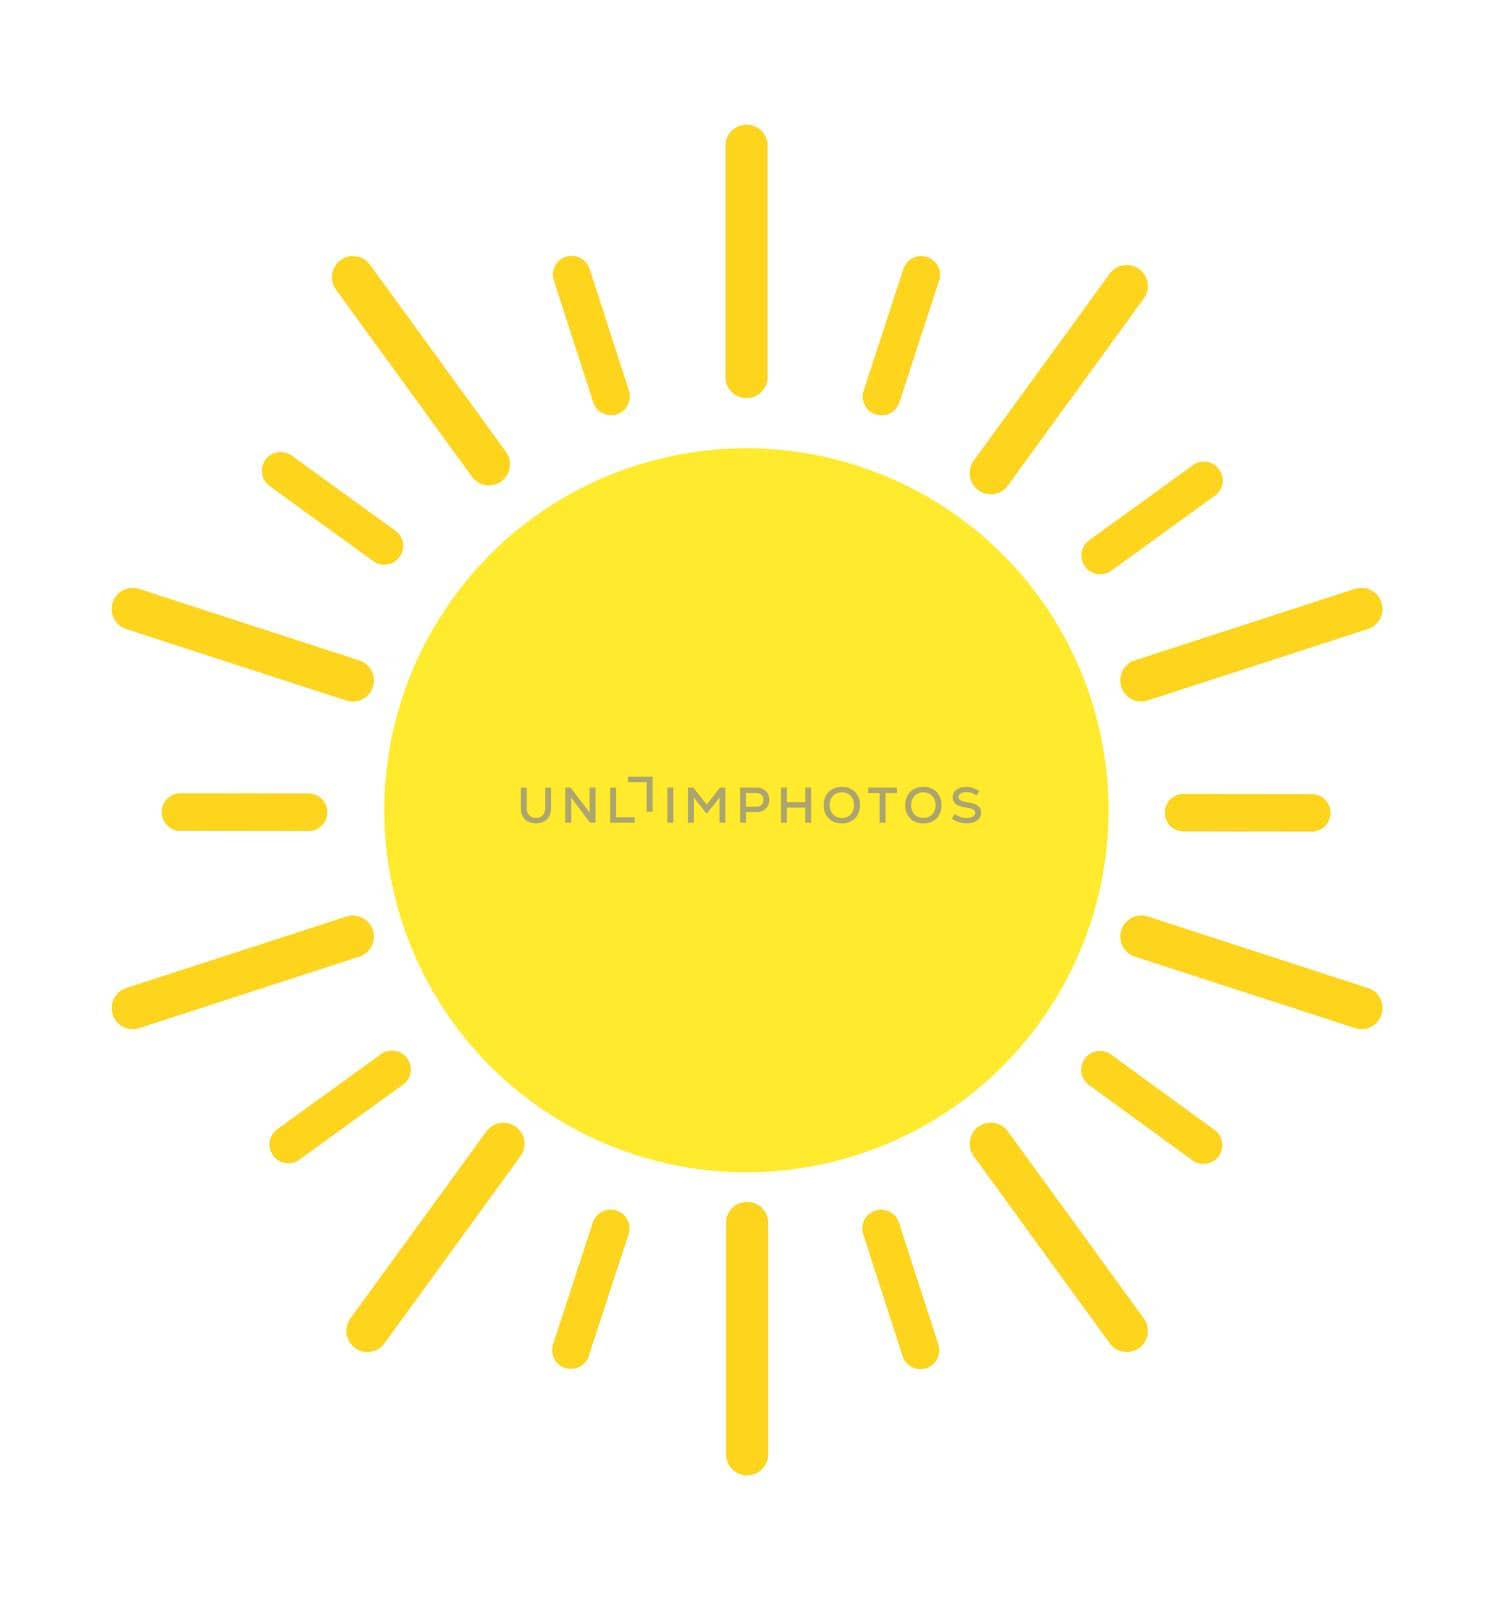 Sun icon vector illustration isolated on white background eps 10